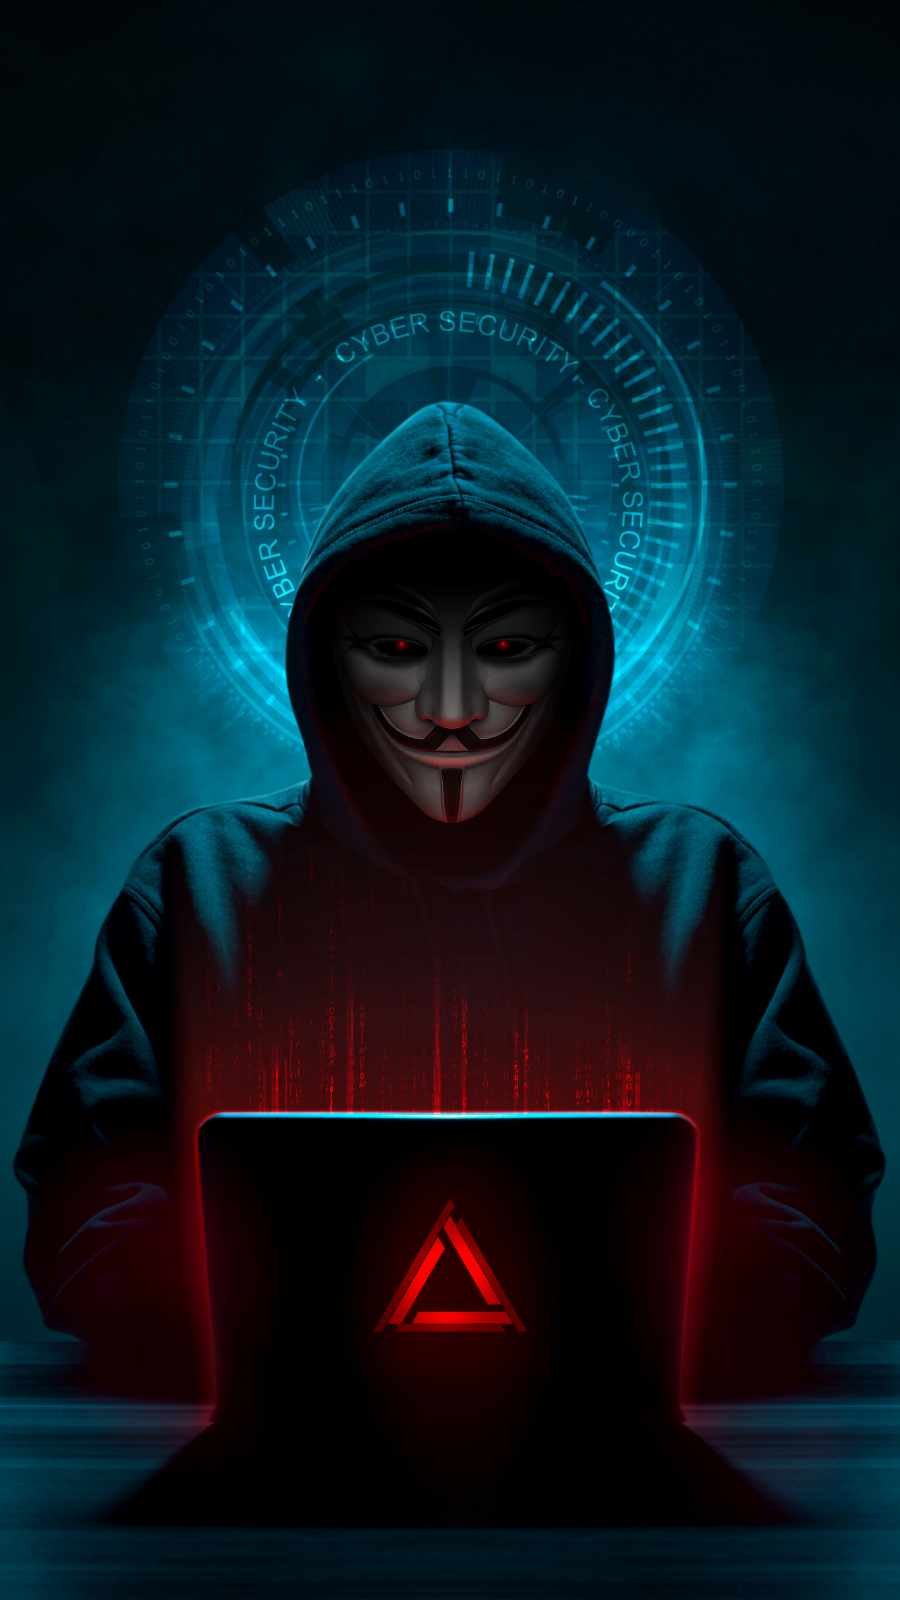 cybersecurity wallpaper